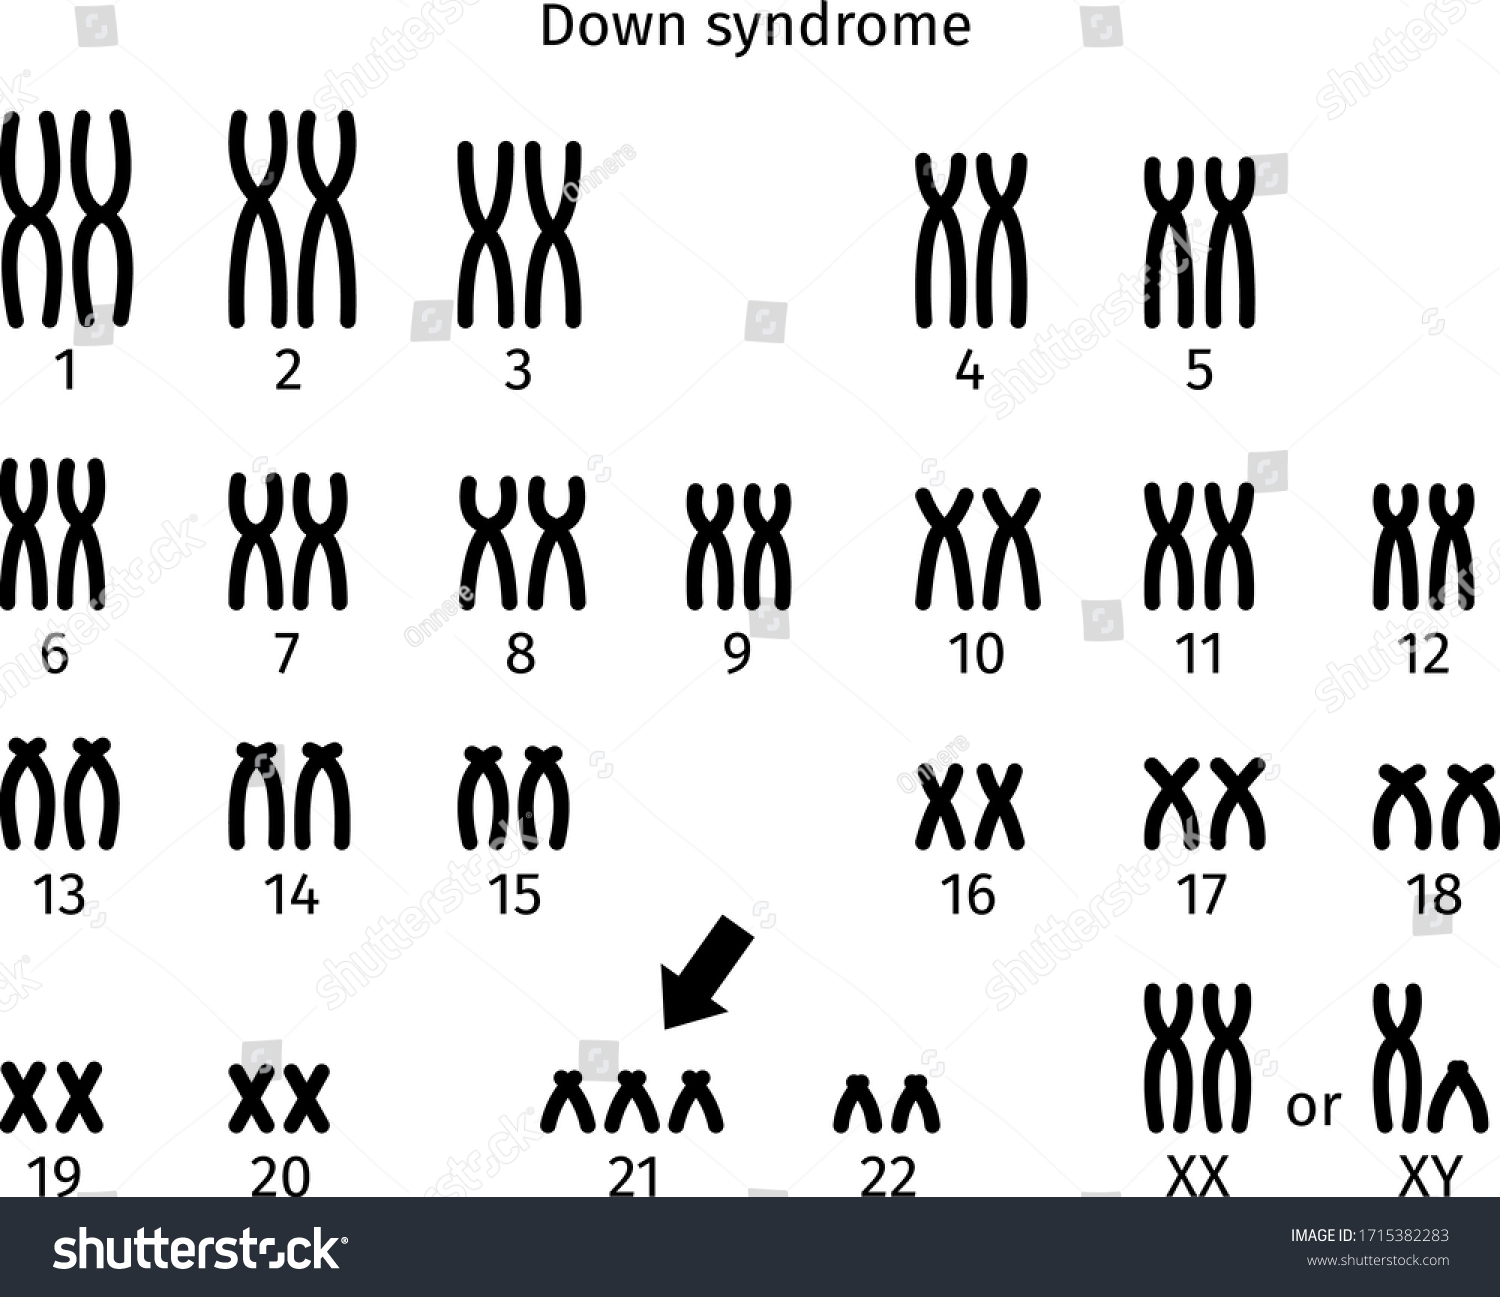 Schéma du syndrome de Down karyotype image vectorielle de stock